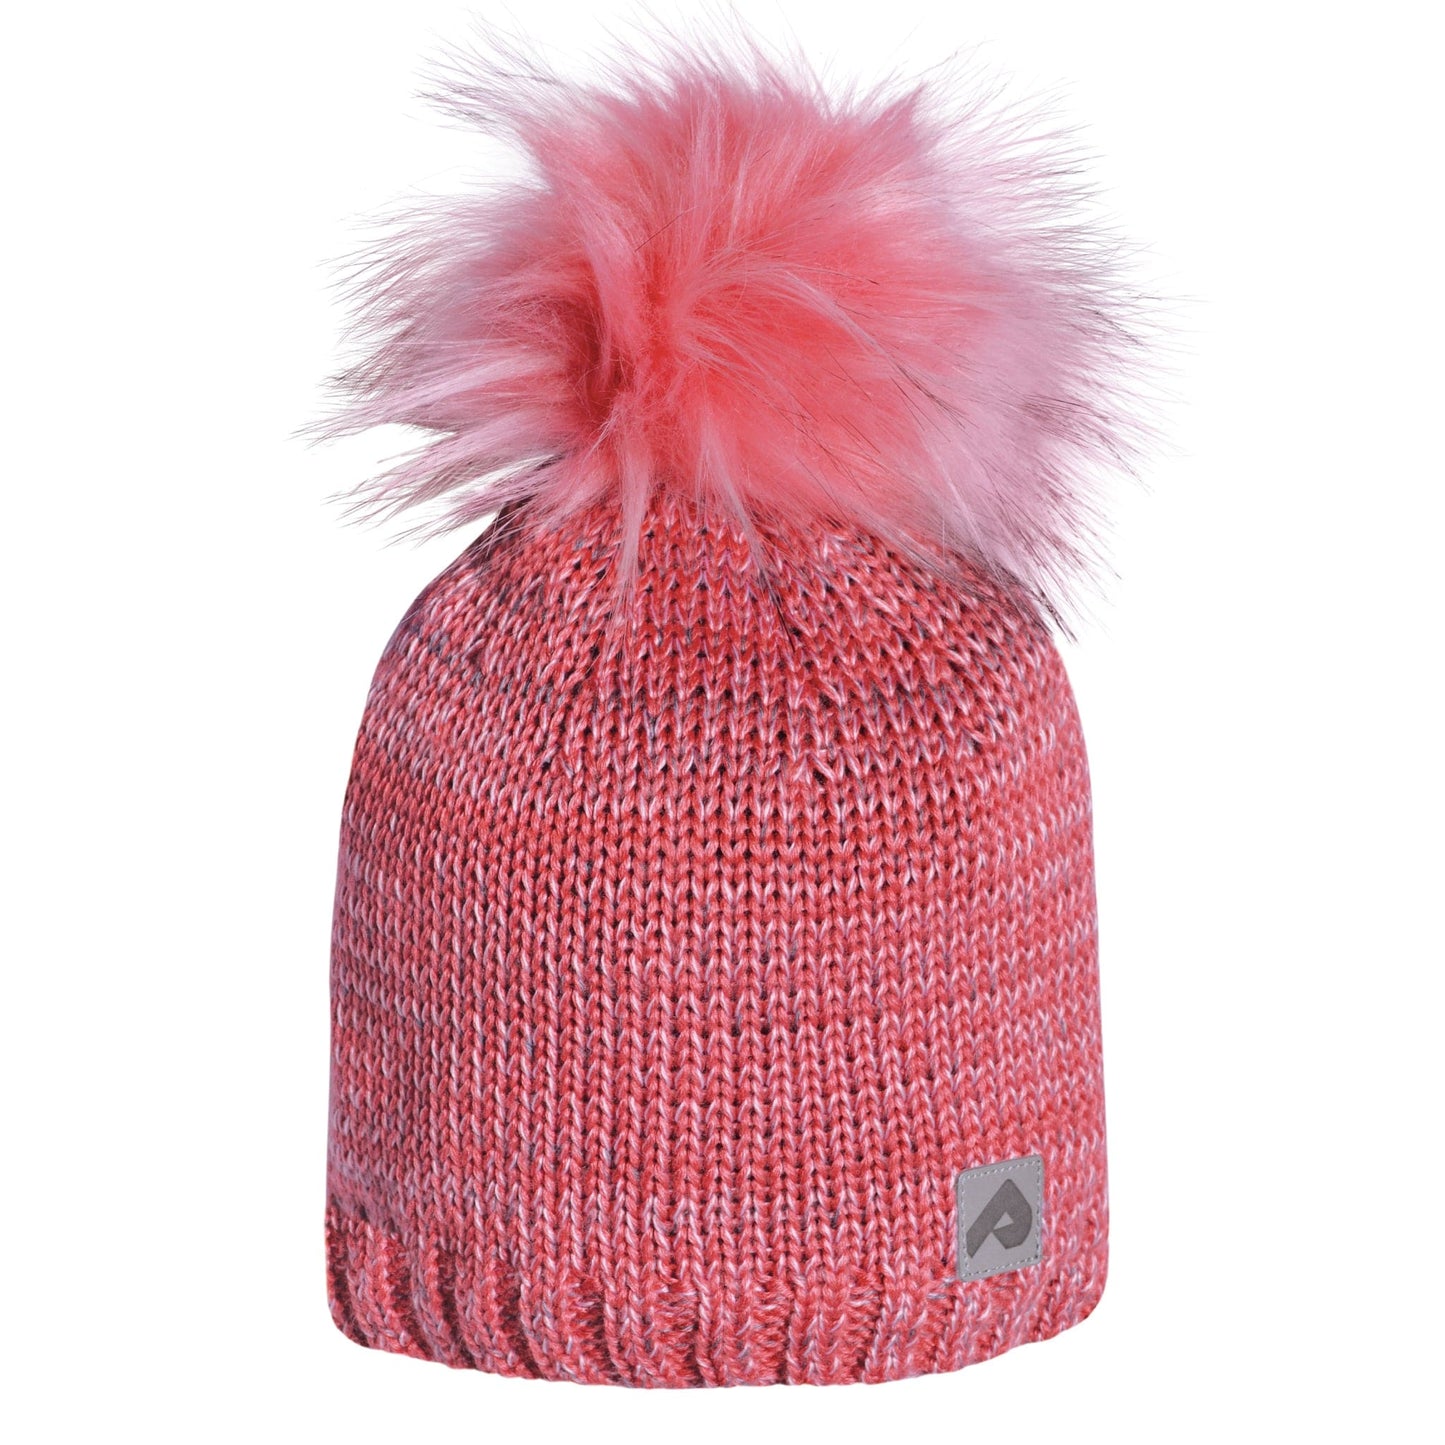 Acrylic hat with fleece lining - Multi Pink